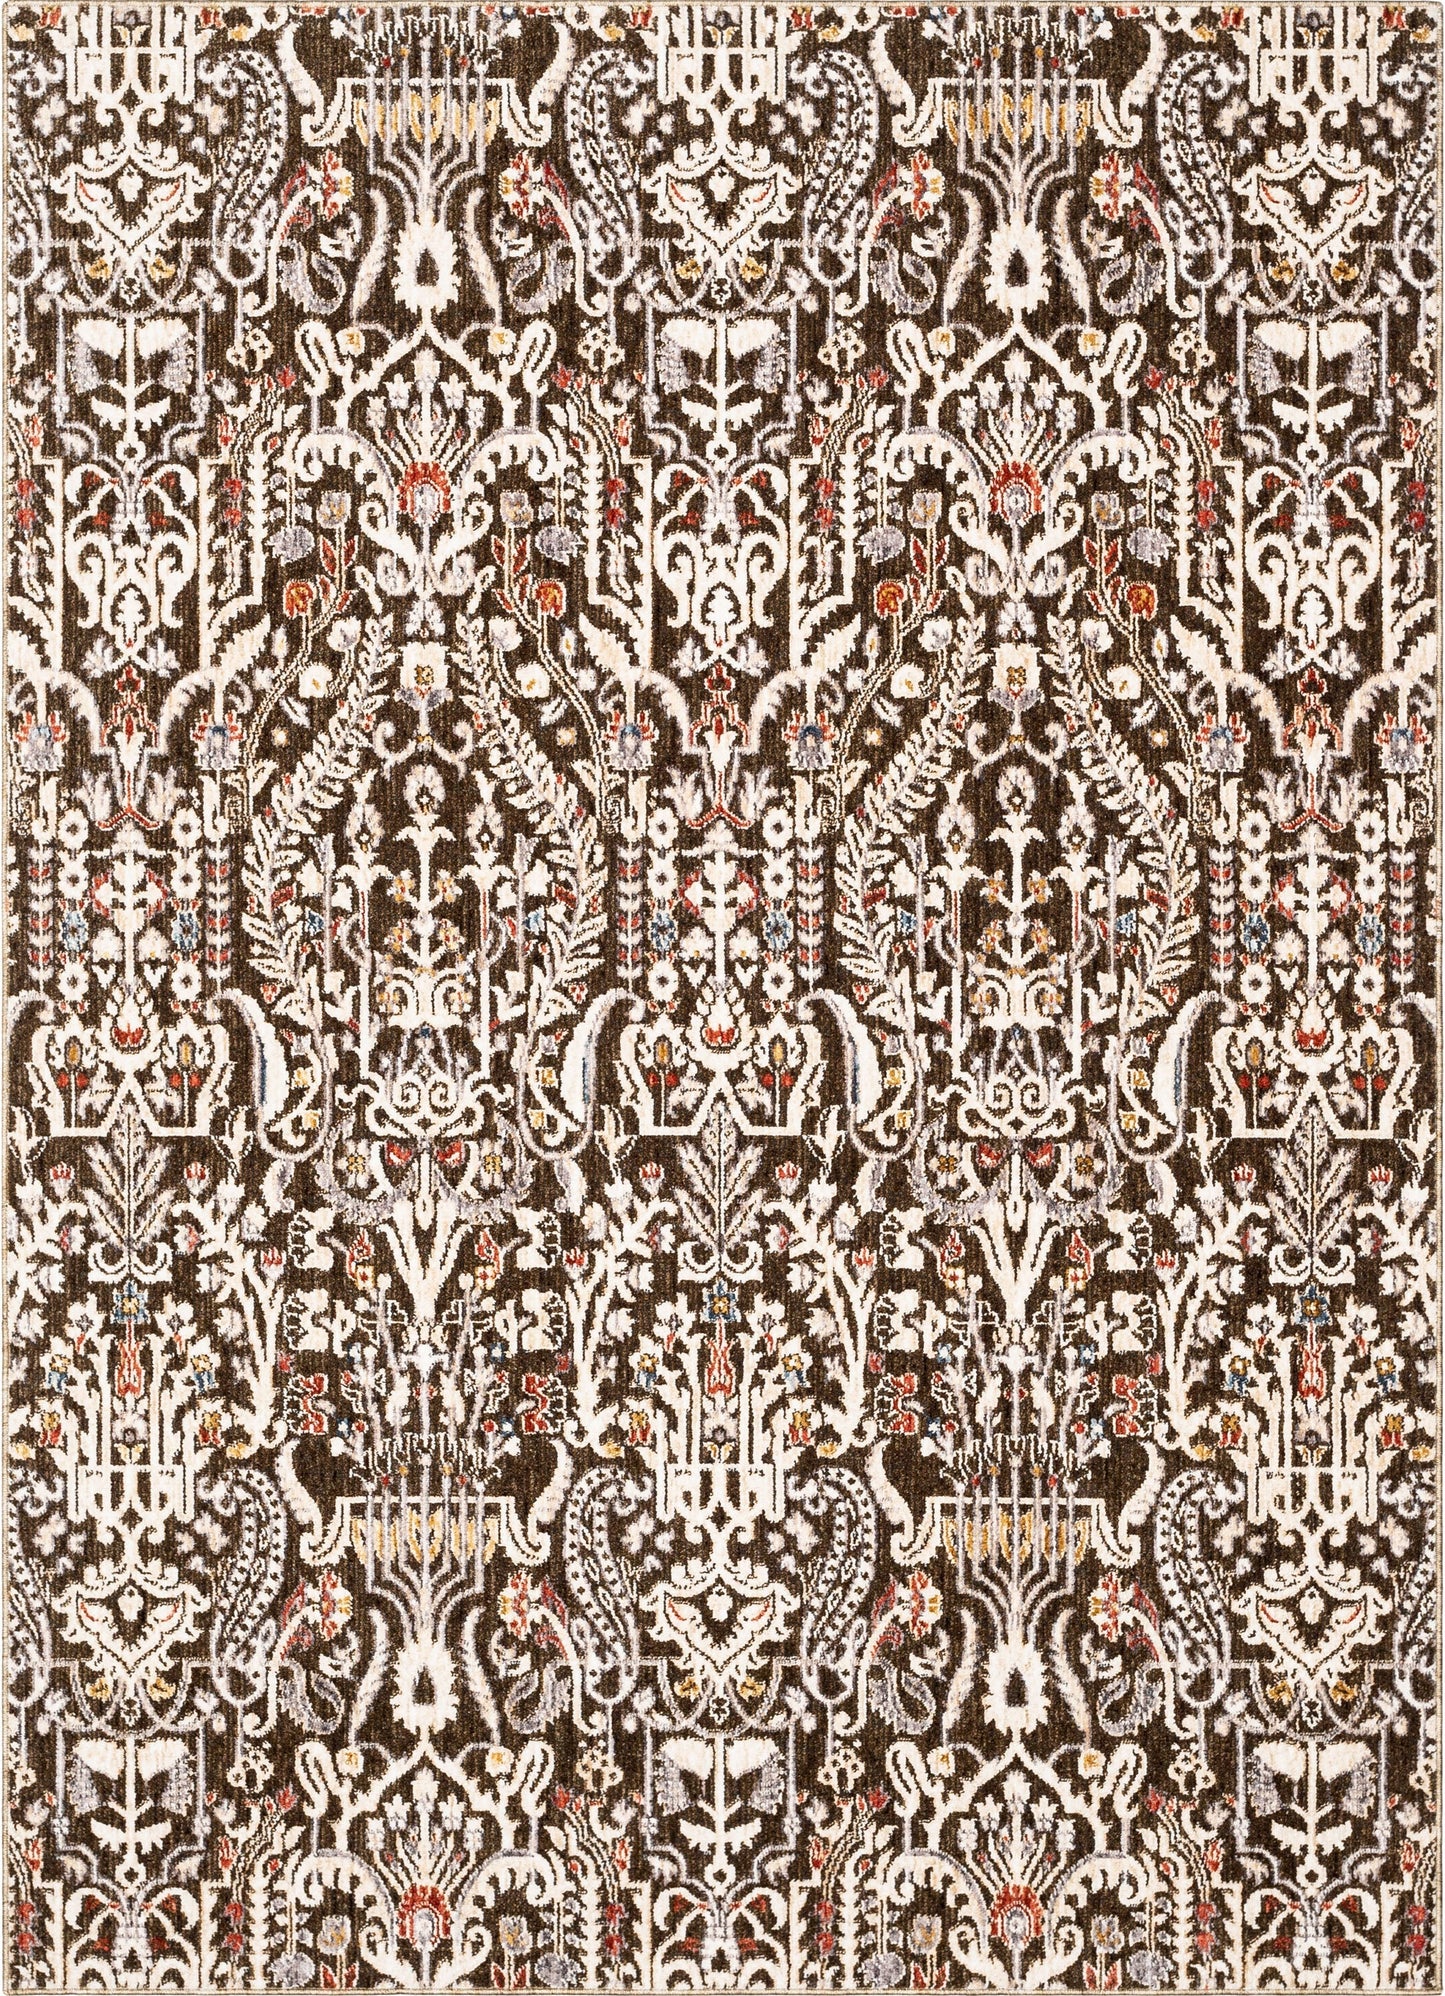 Ahote Vintage Floral Damask Pattern Brown Textured Rug TEN-18